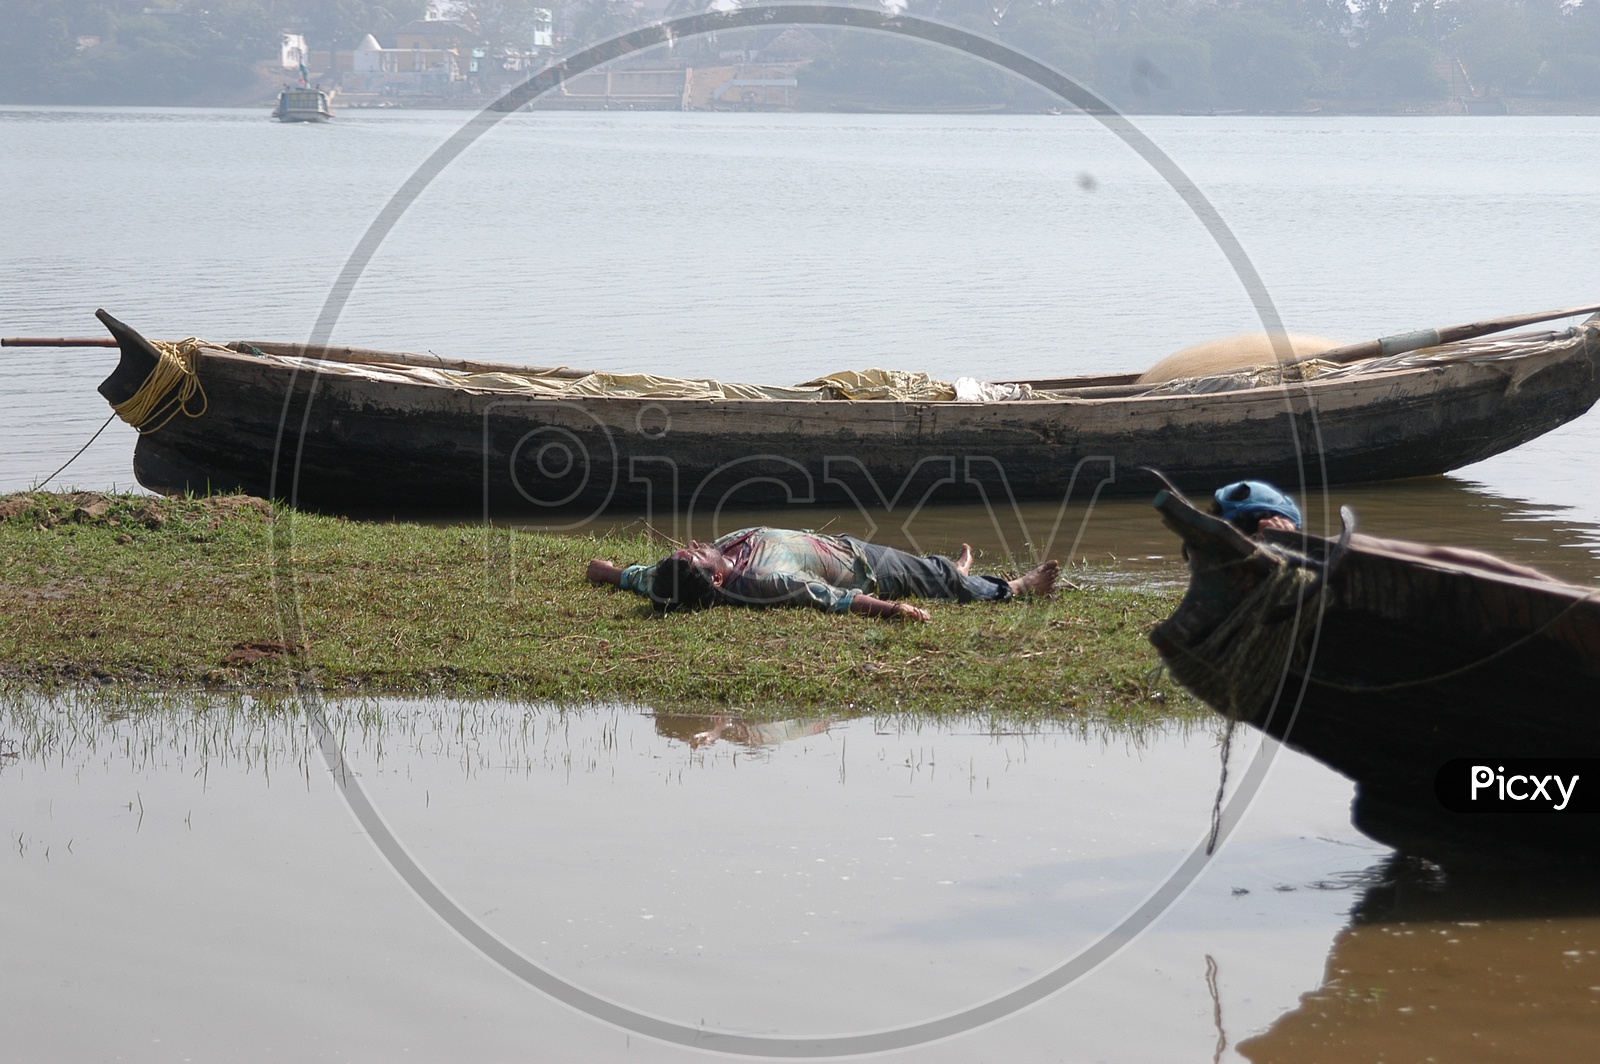 Drowned Man on Godavari River Bank